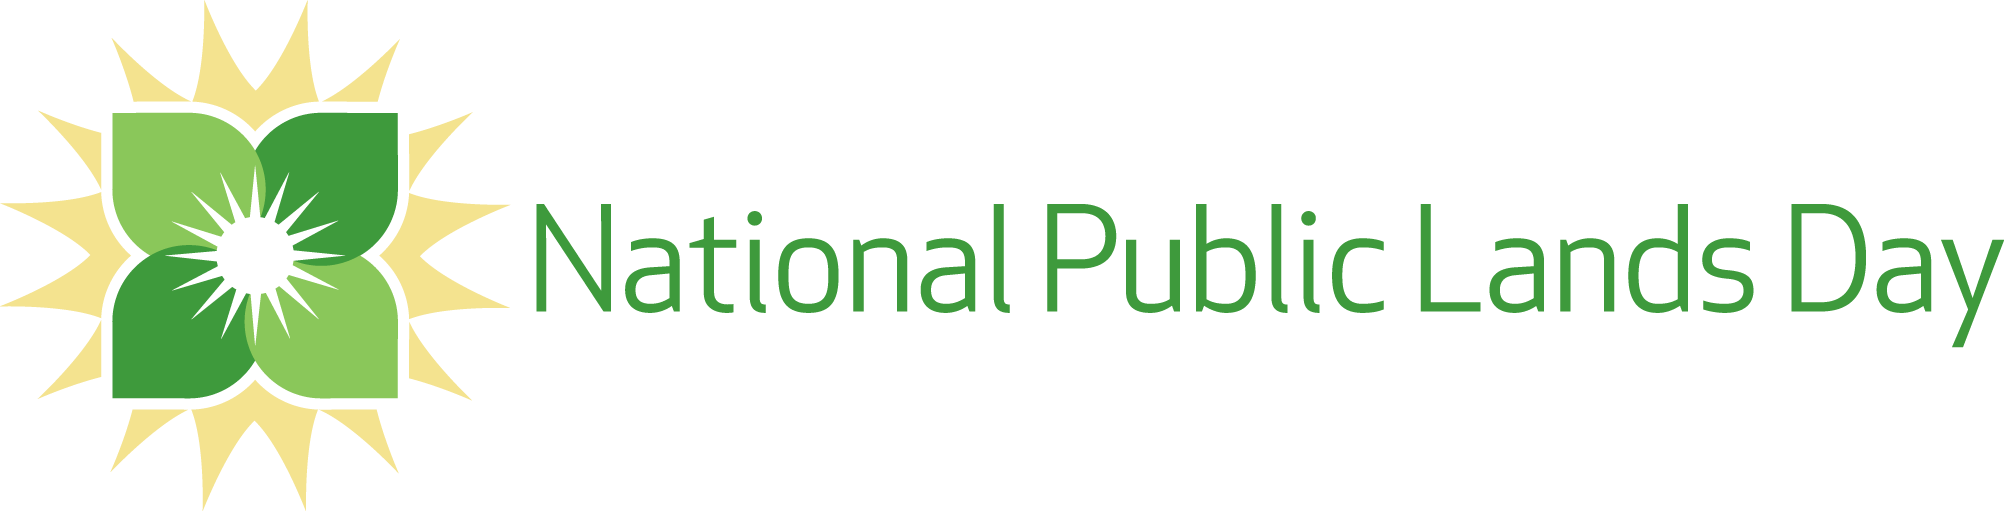 Photo of National Public Lands Day logo